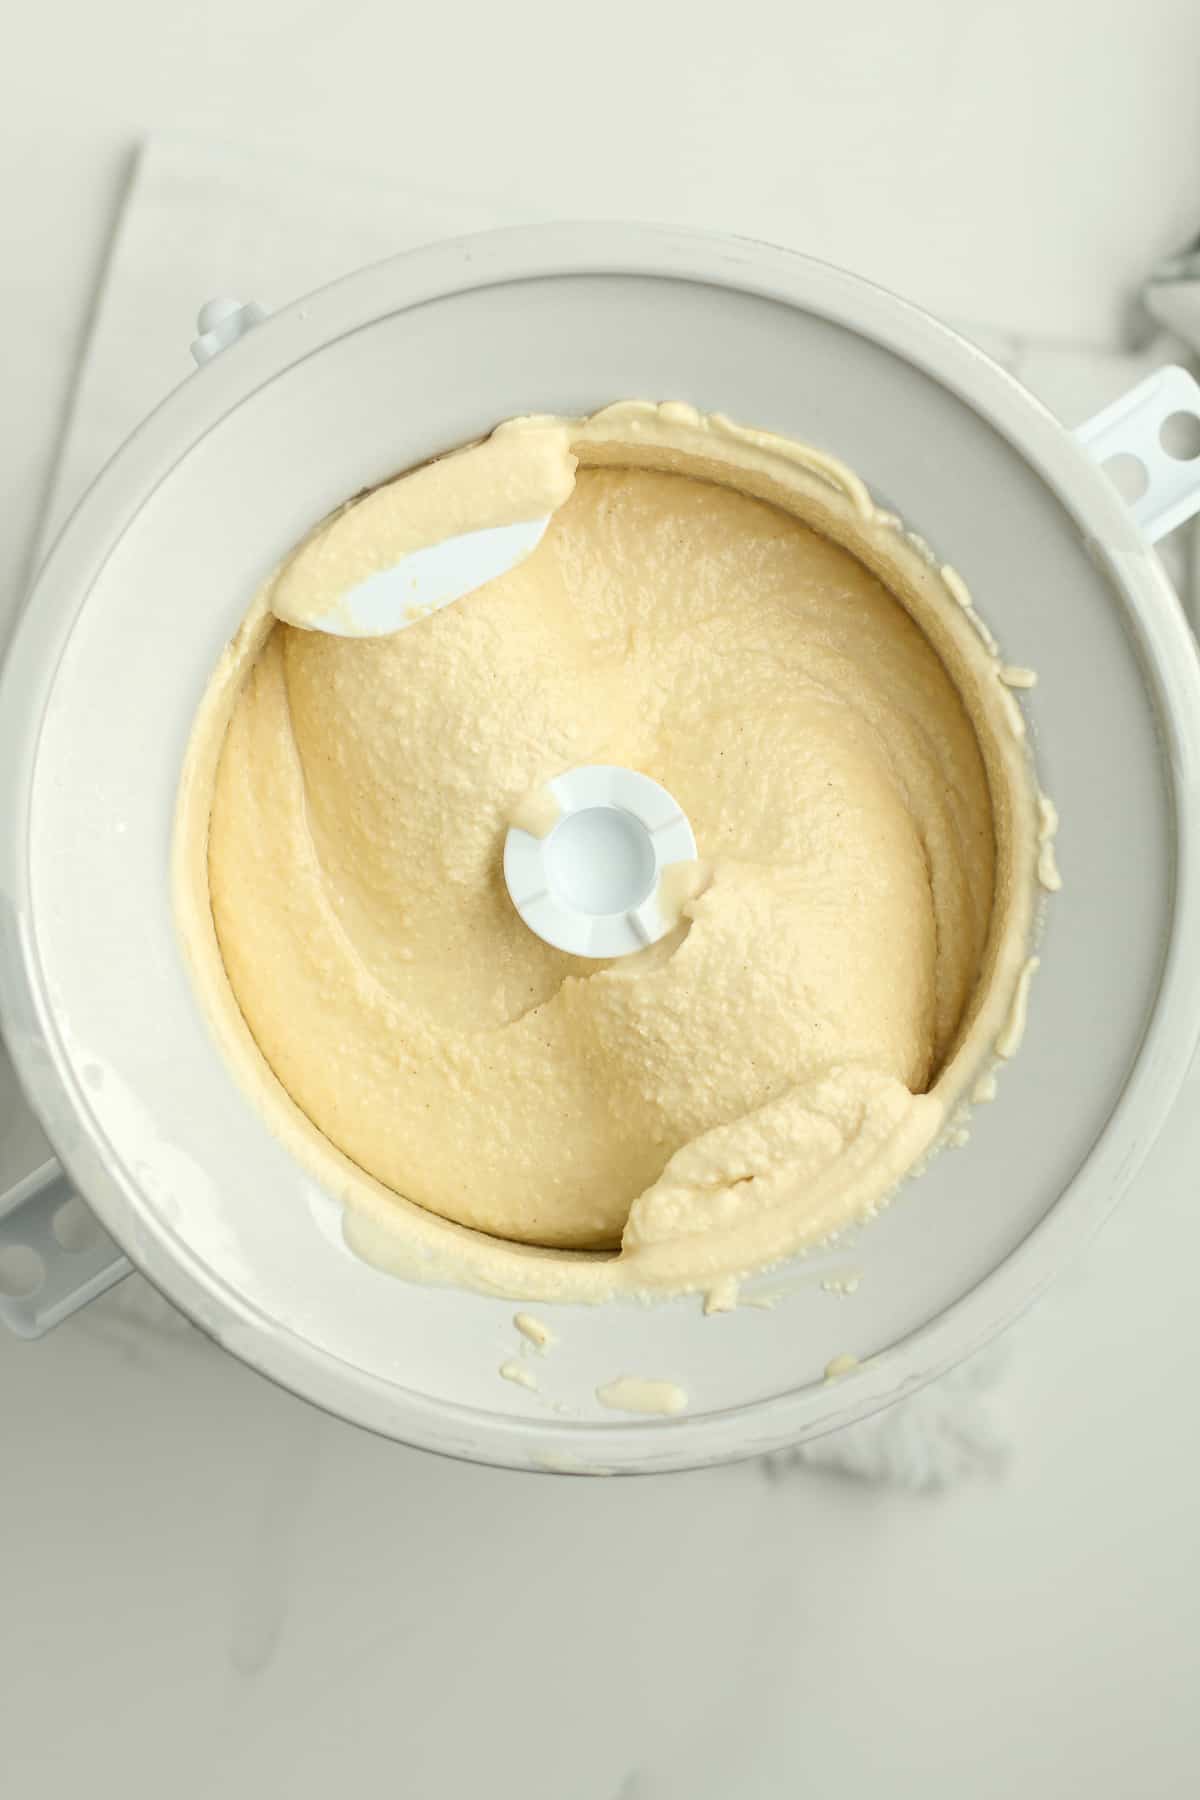 A KitchenAid ice cream churner with peanut butter ice cream inside.